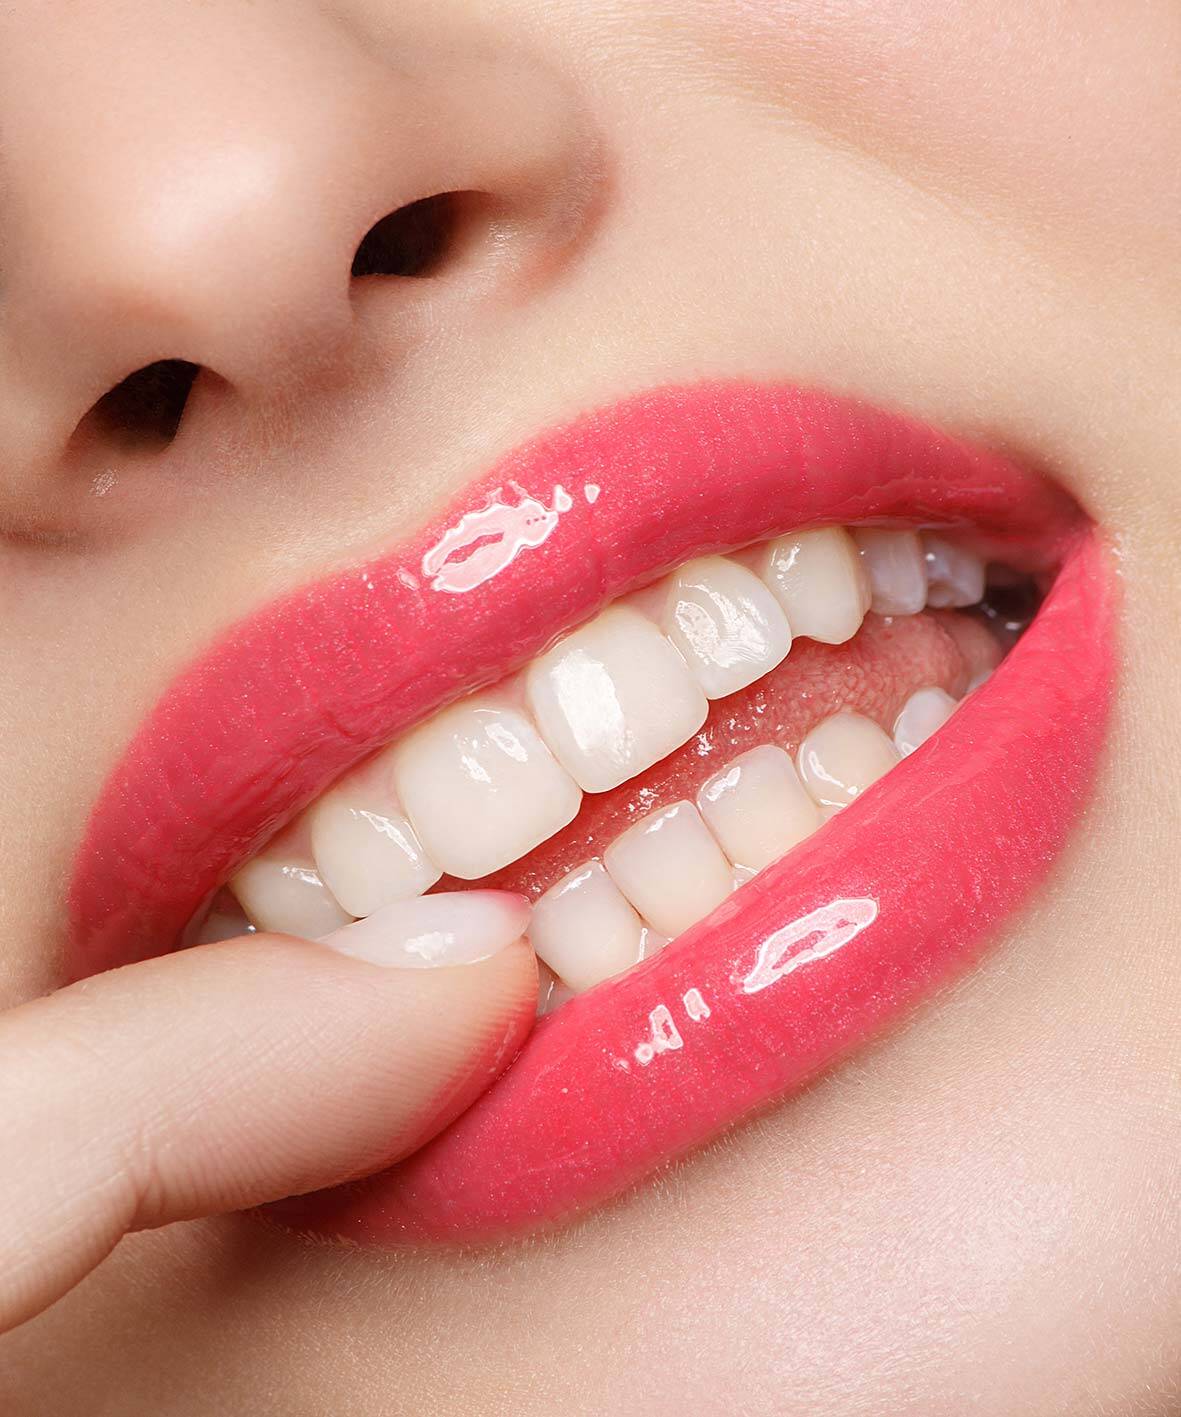 LusciousLips® le gloss smart-aging et anti-âge. Idéal pour le soin des lèvres. 
Ideal als Ergänzung zu einer Lippen-Unterspritzung. LusciousLips ist das Lipgloss das von Dermatolog*innen empfohlen wird. 